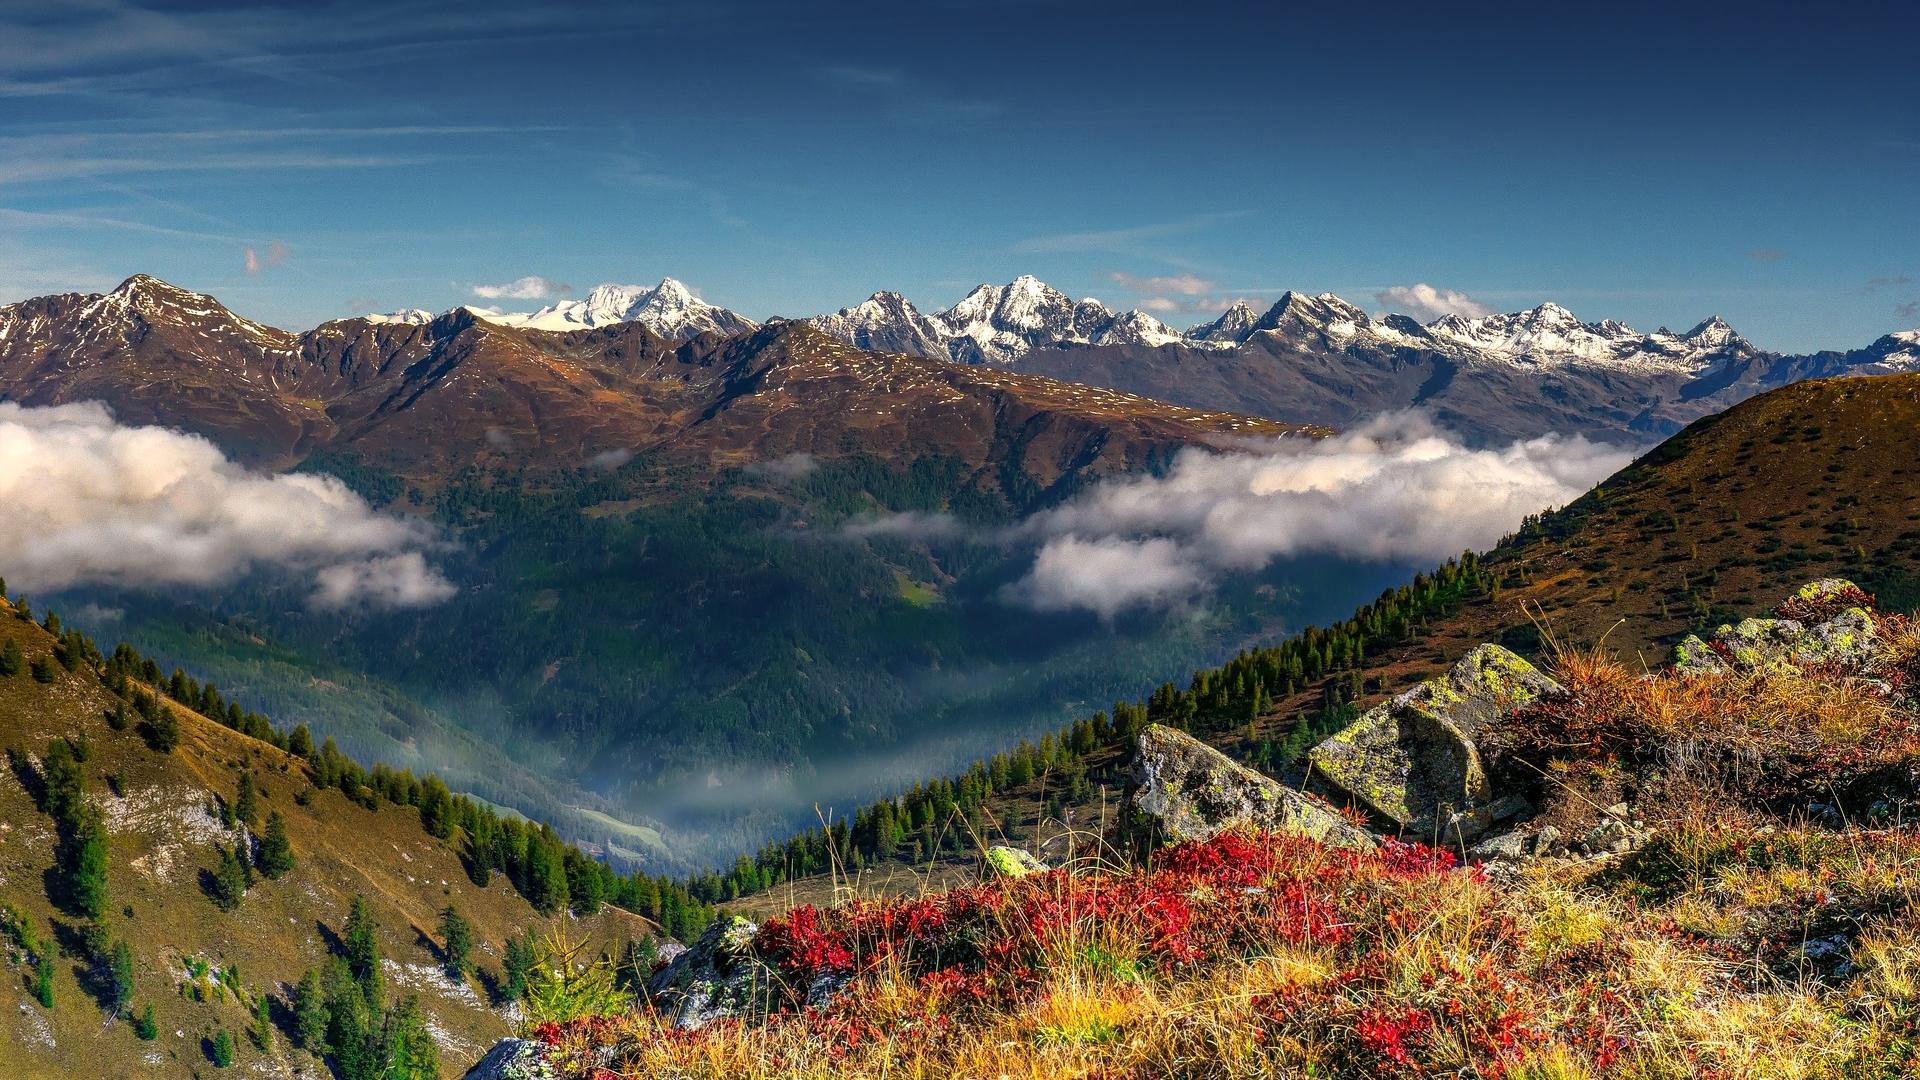 Rubrik_Politik_und_Recht_c._Pixabay_Alpen_mountain-landscape-2832109_1920